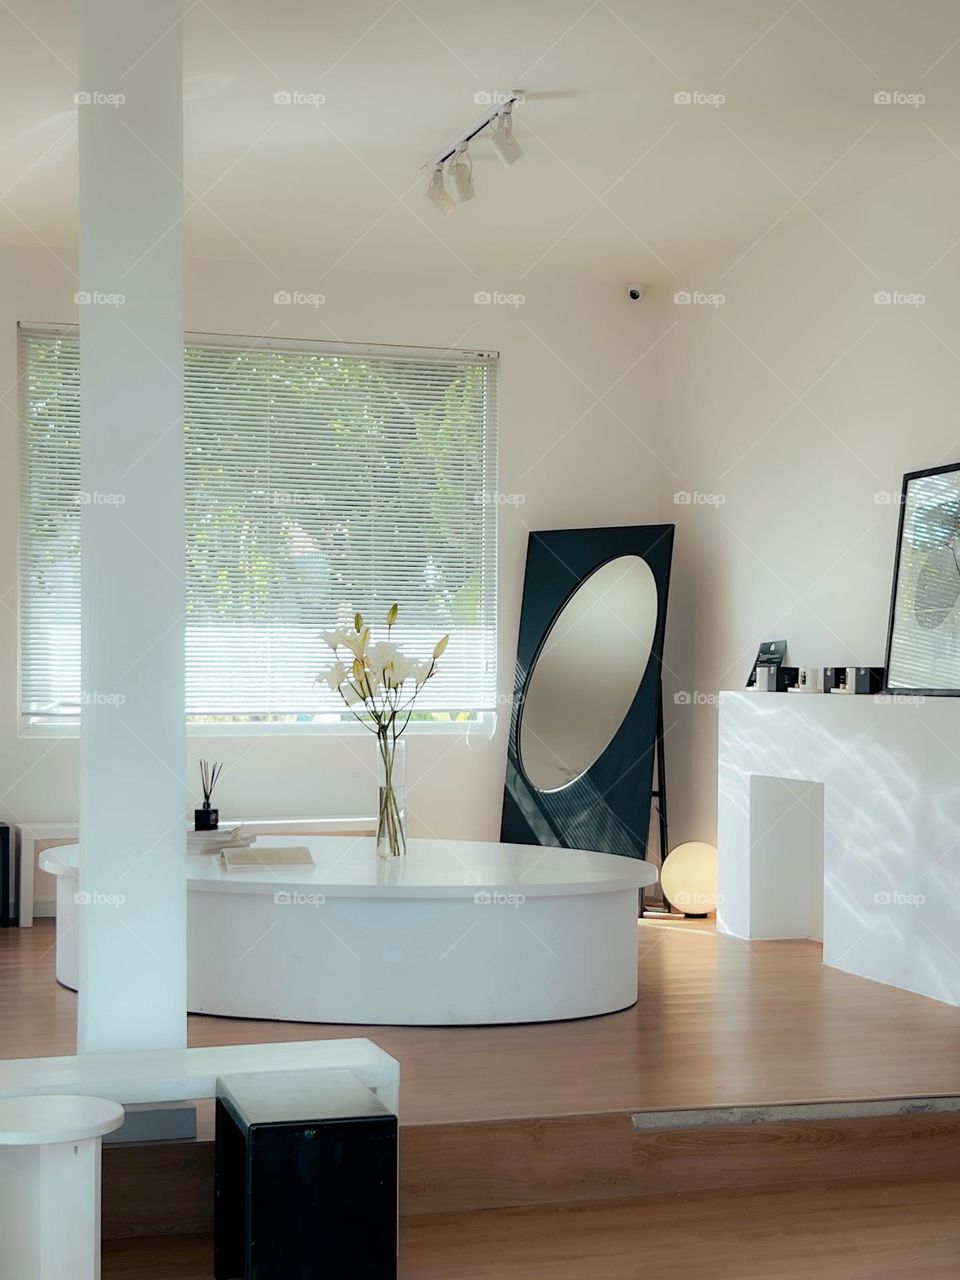 A coffeeshop with minimalism interior design style